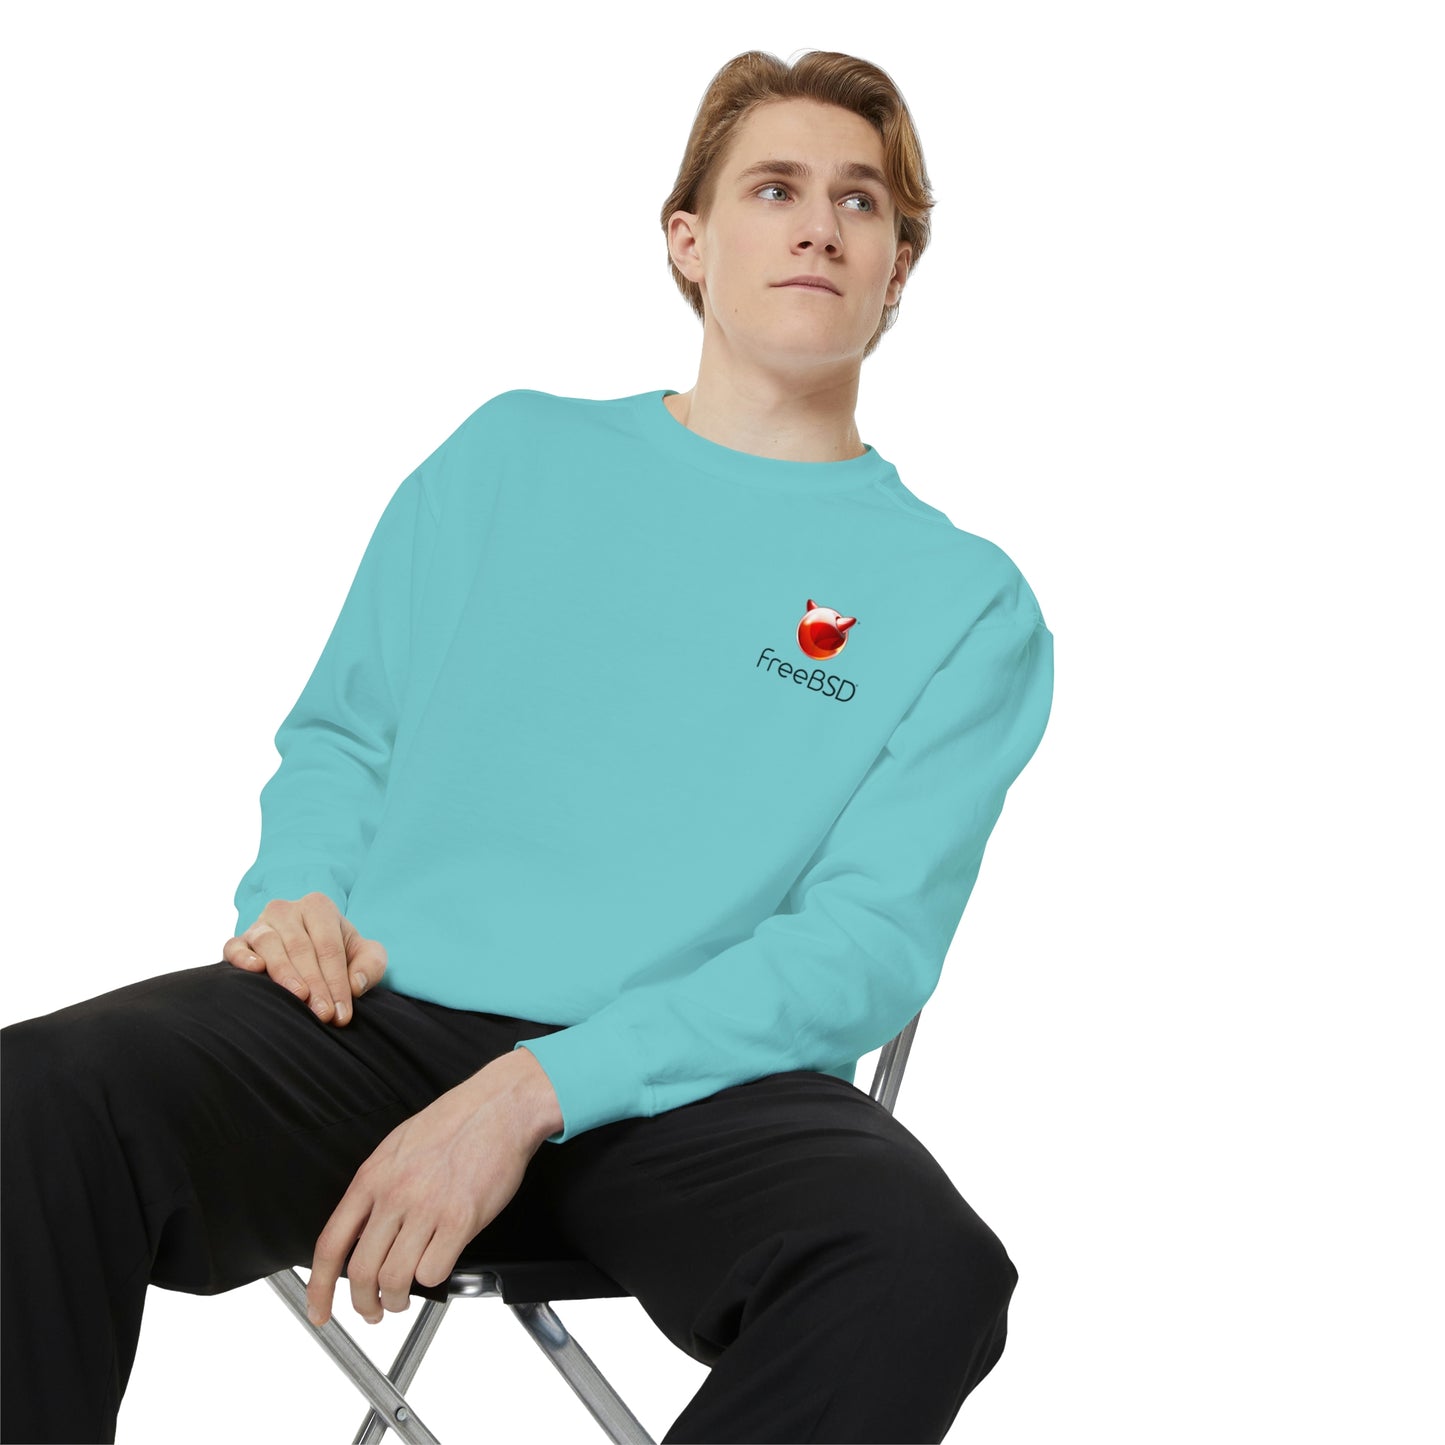 Unisex FreeBSD Logo Garment-Dyed Sweatshirt